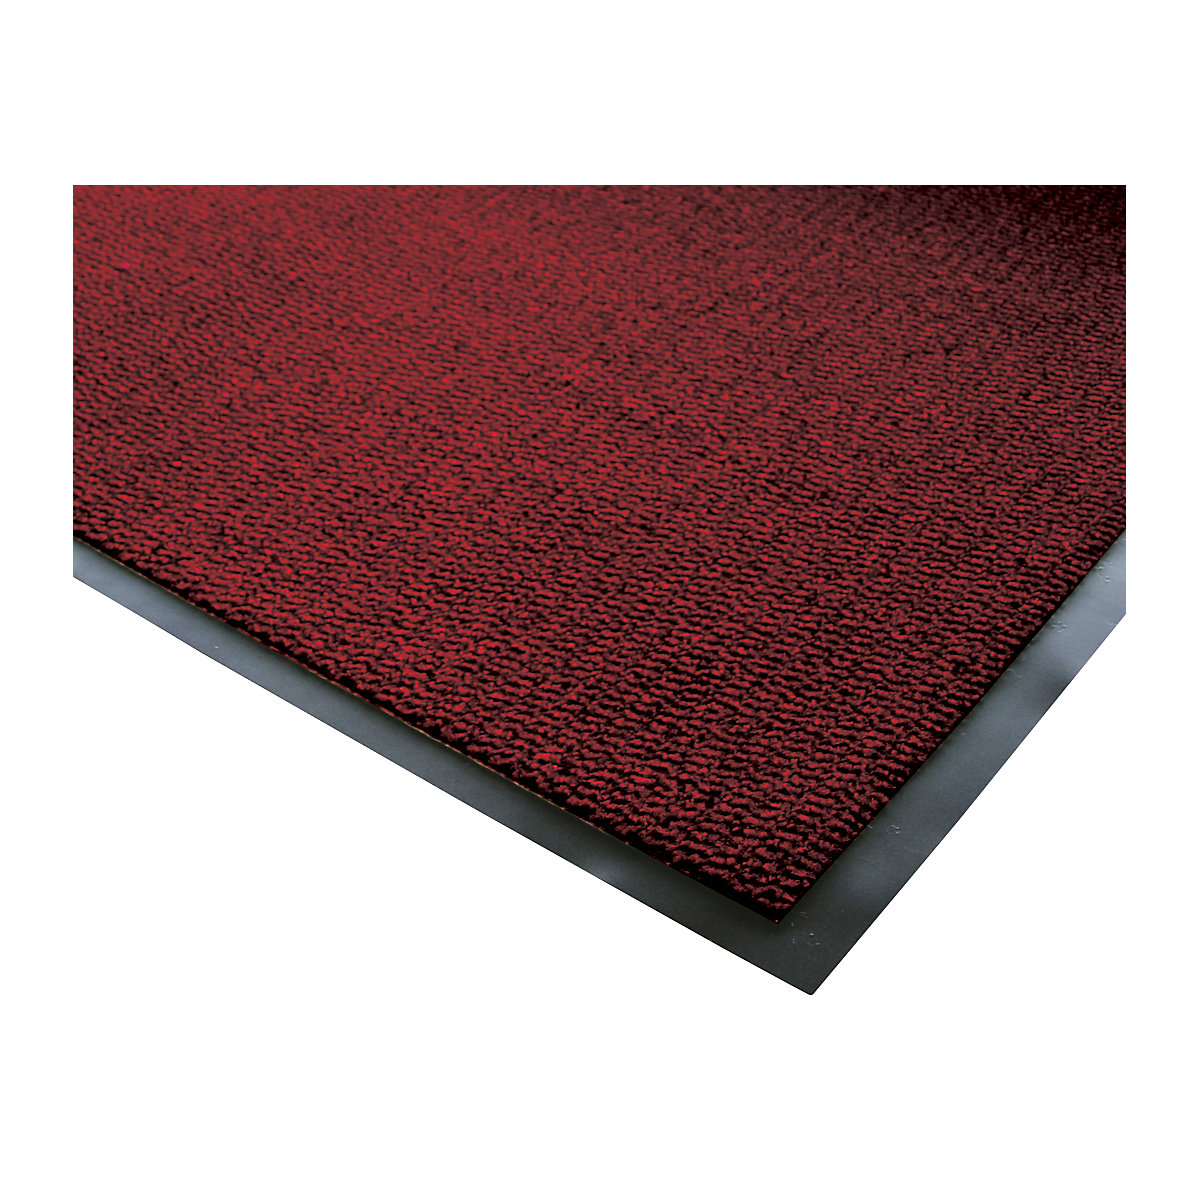 Entrance matting for indoor use, polypropylene pile, LxW 1200 x 900 mm, black / red